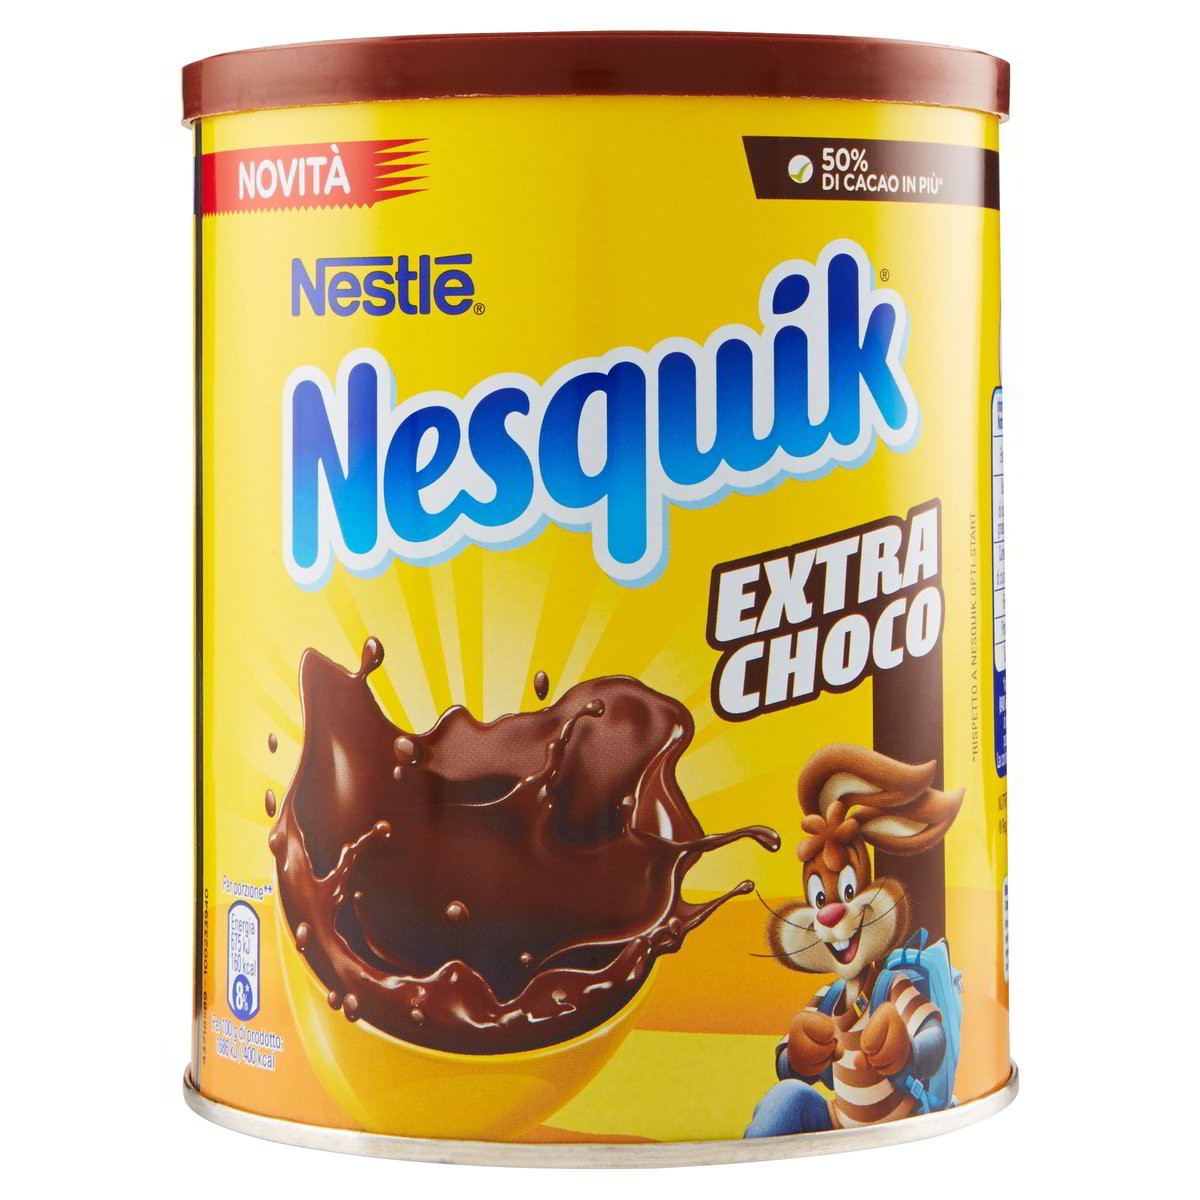 Nestlè Nesquik Extra Choco